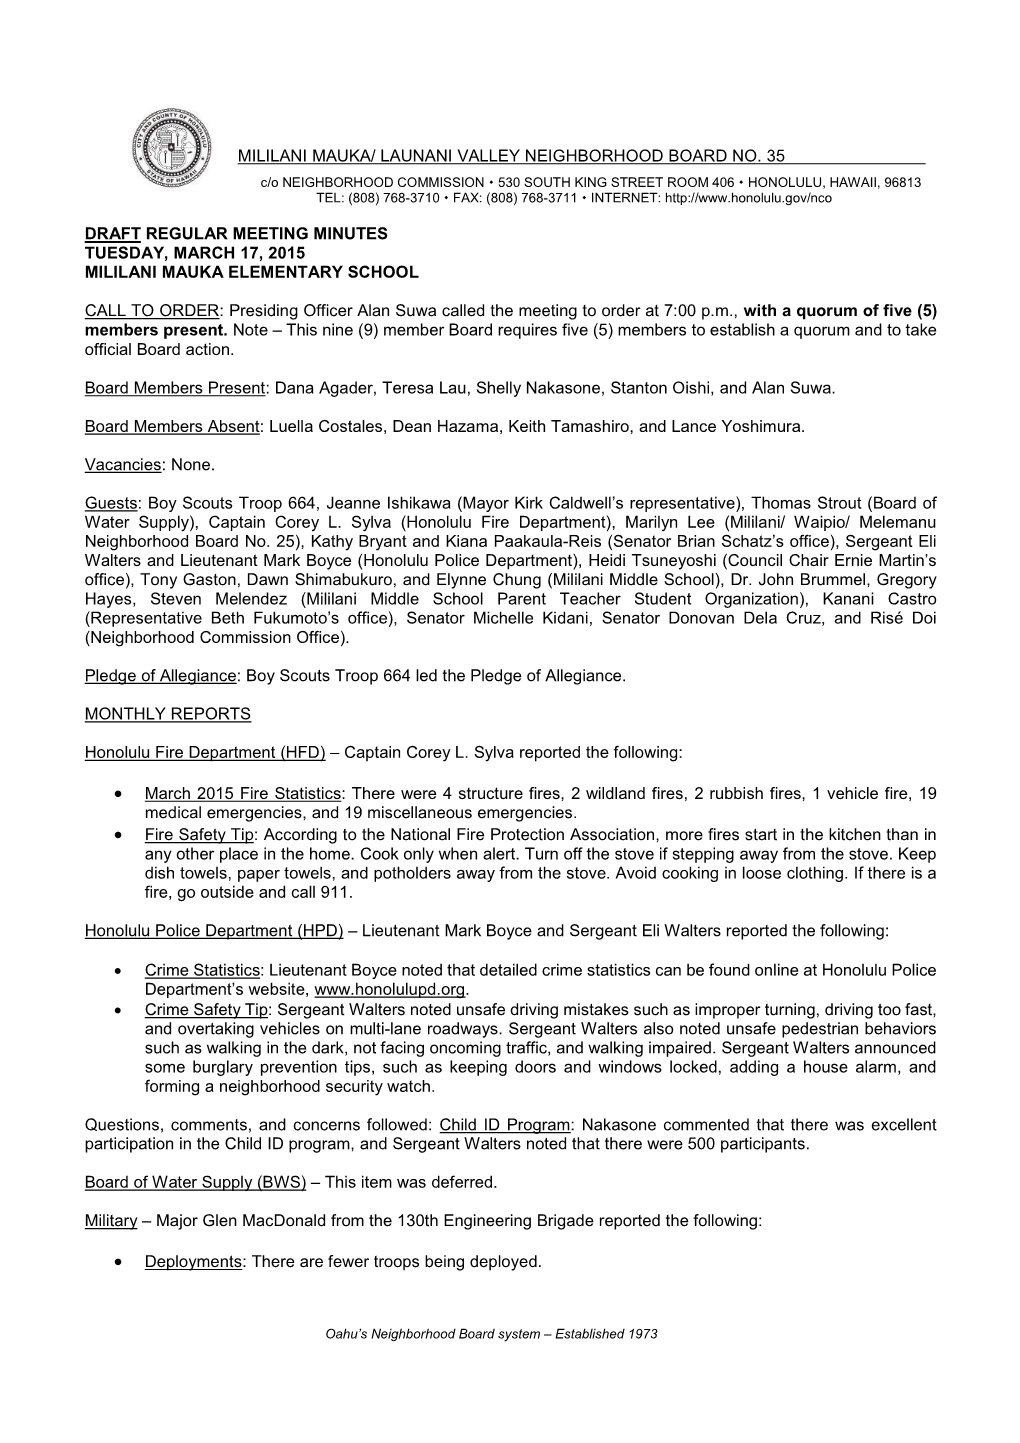 Launani Valley Neighborhood Board No. 35 Draft Regular Meeting Minutes Tuesday, March 17, 2015 Mililani Mauka El